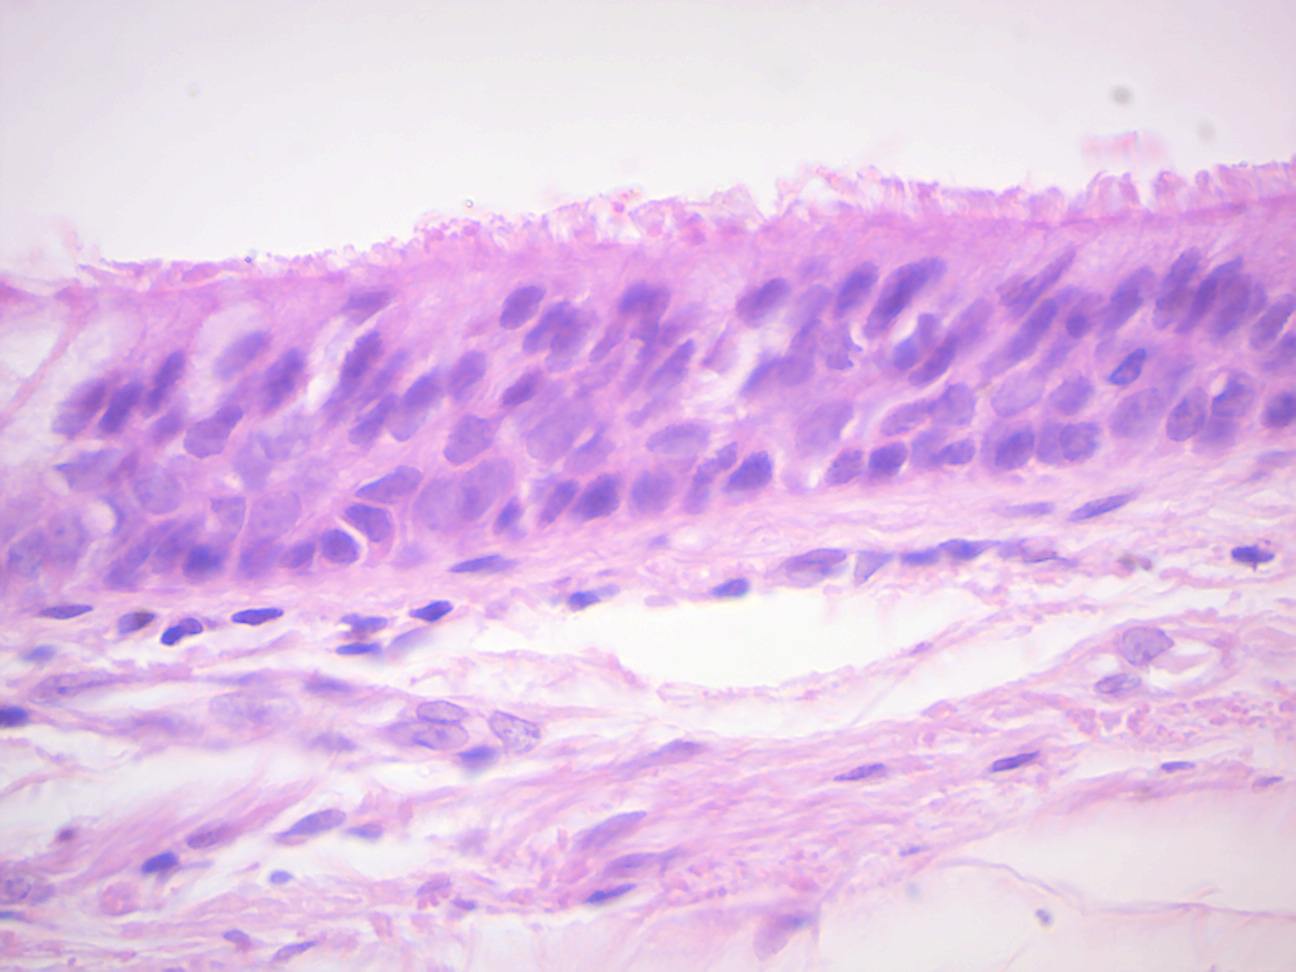 Pseudostratified ciliated columnar epithelium.